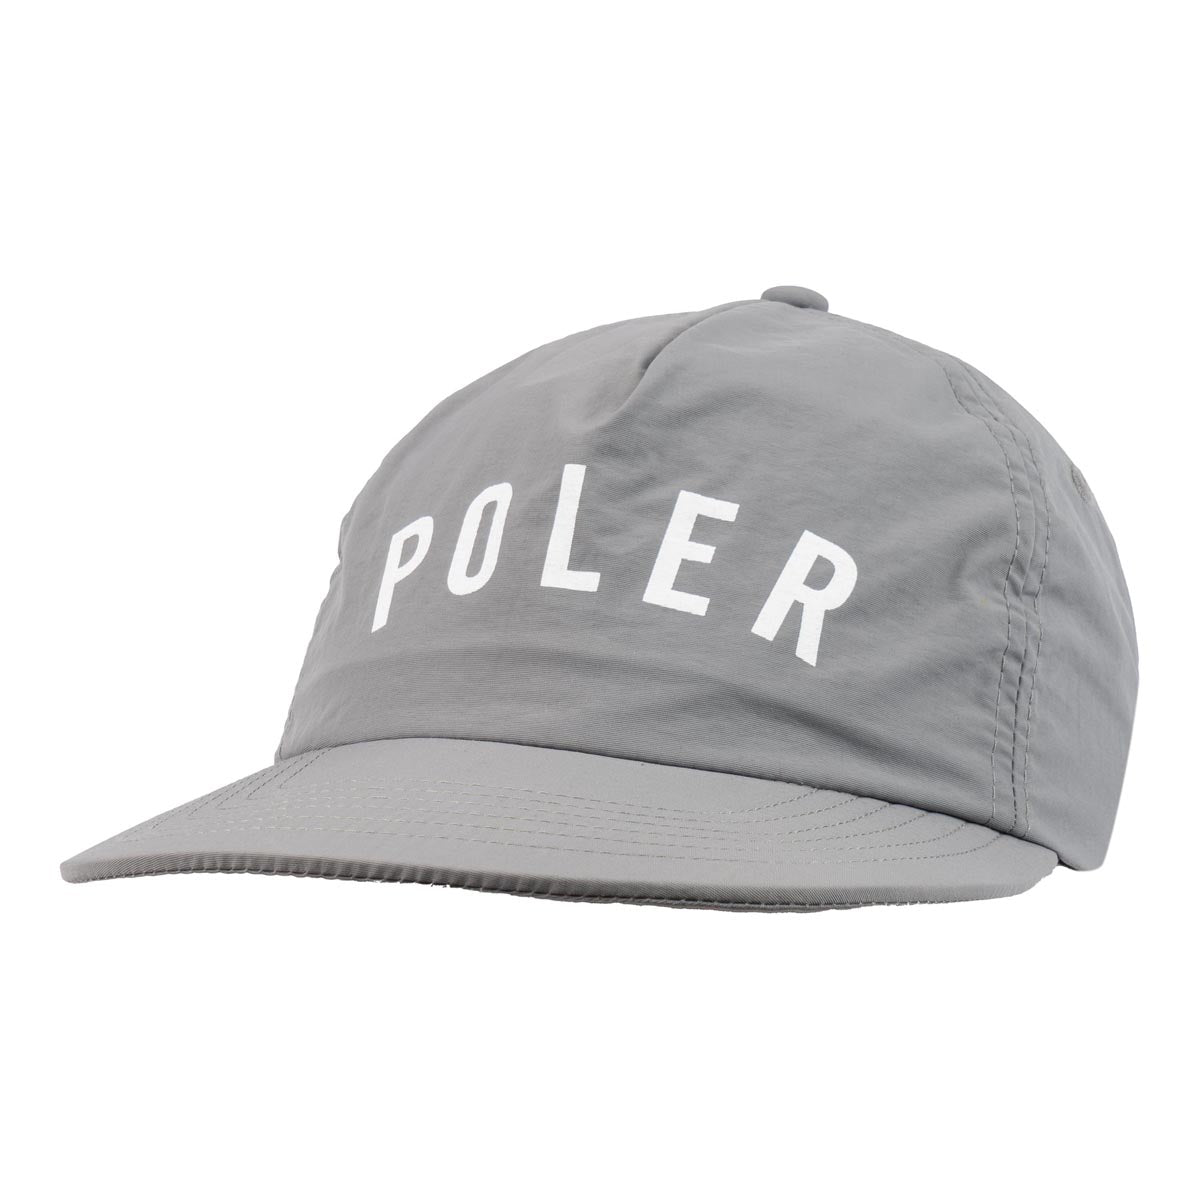 Poler State Nylon Hat - Gray image 1